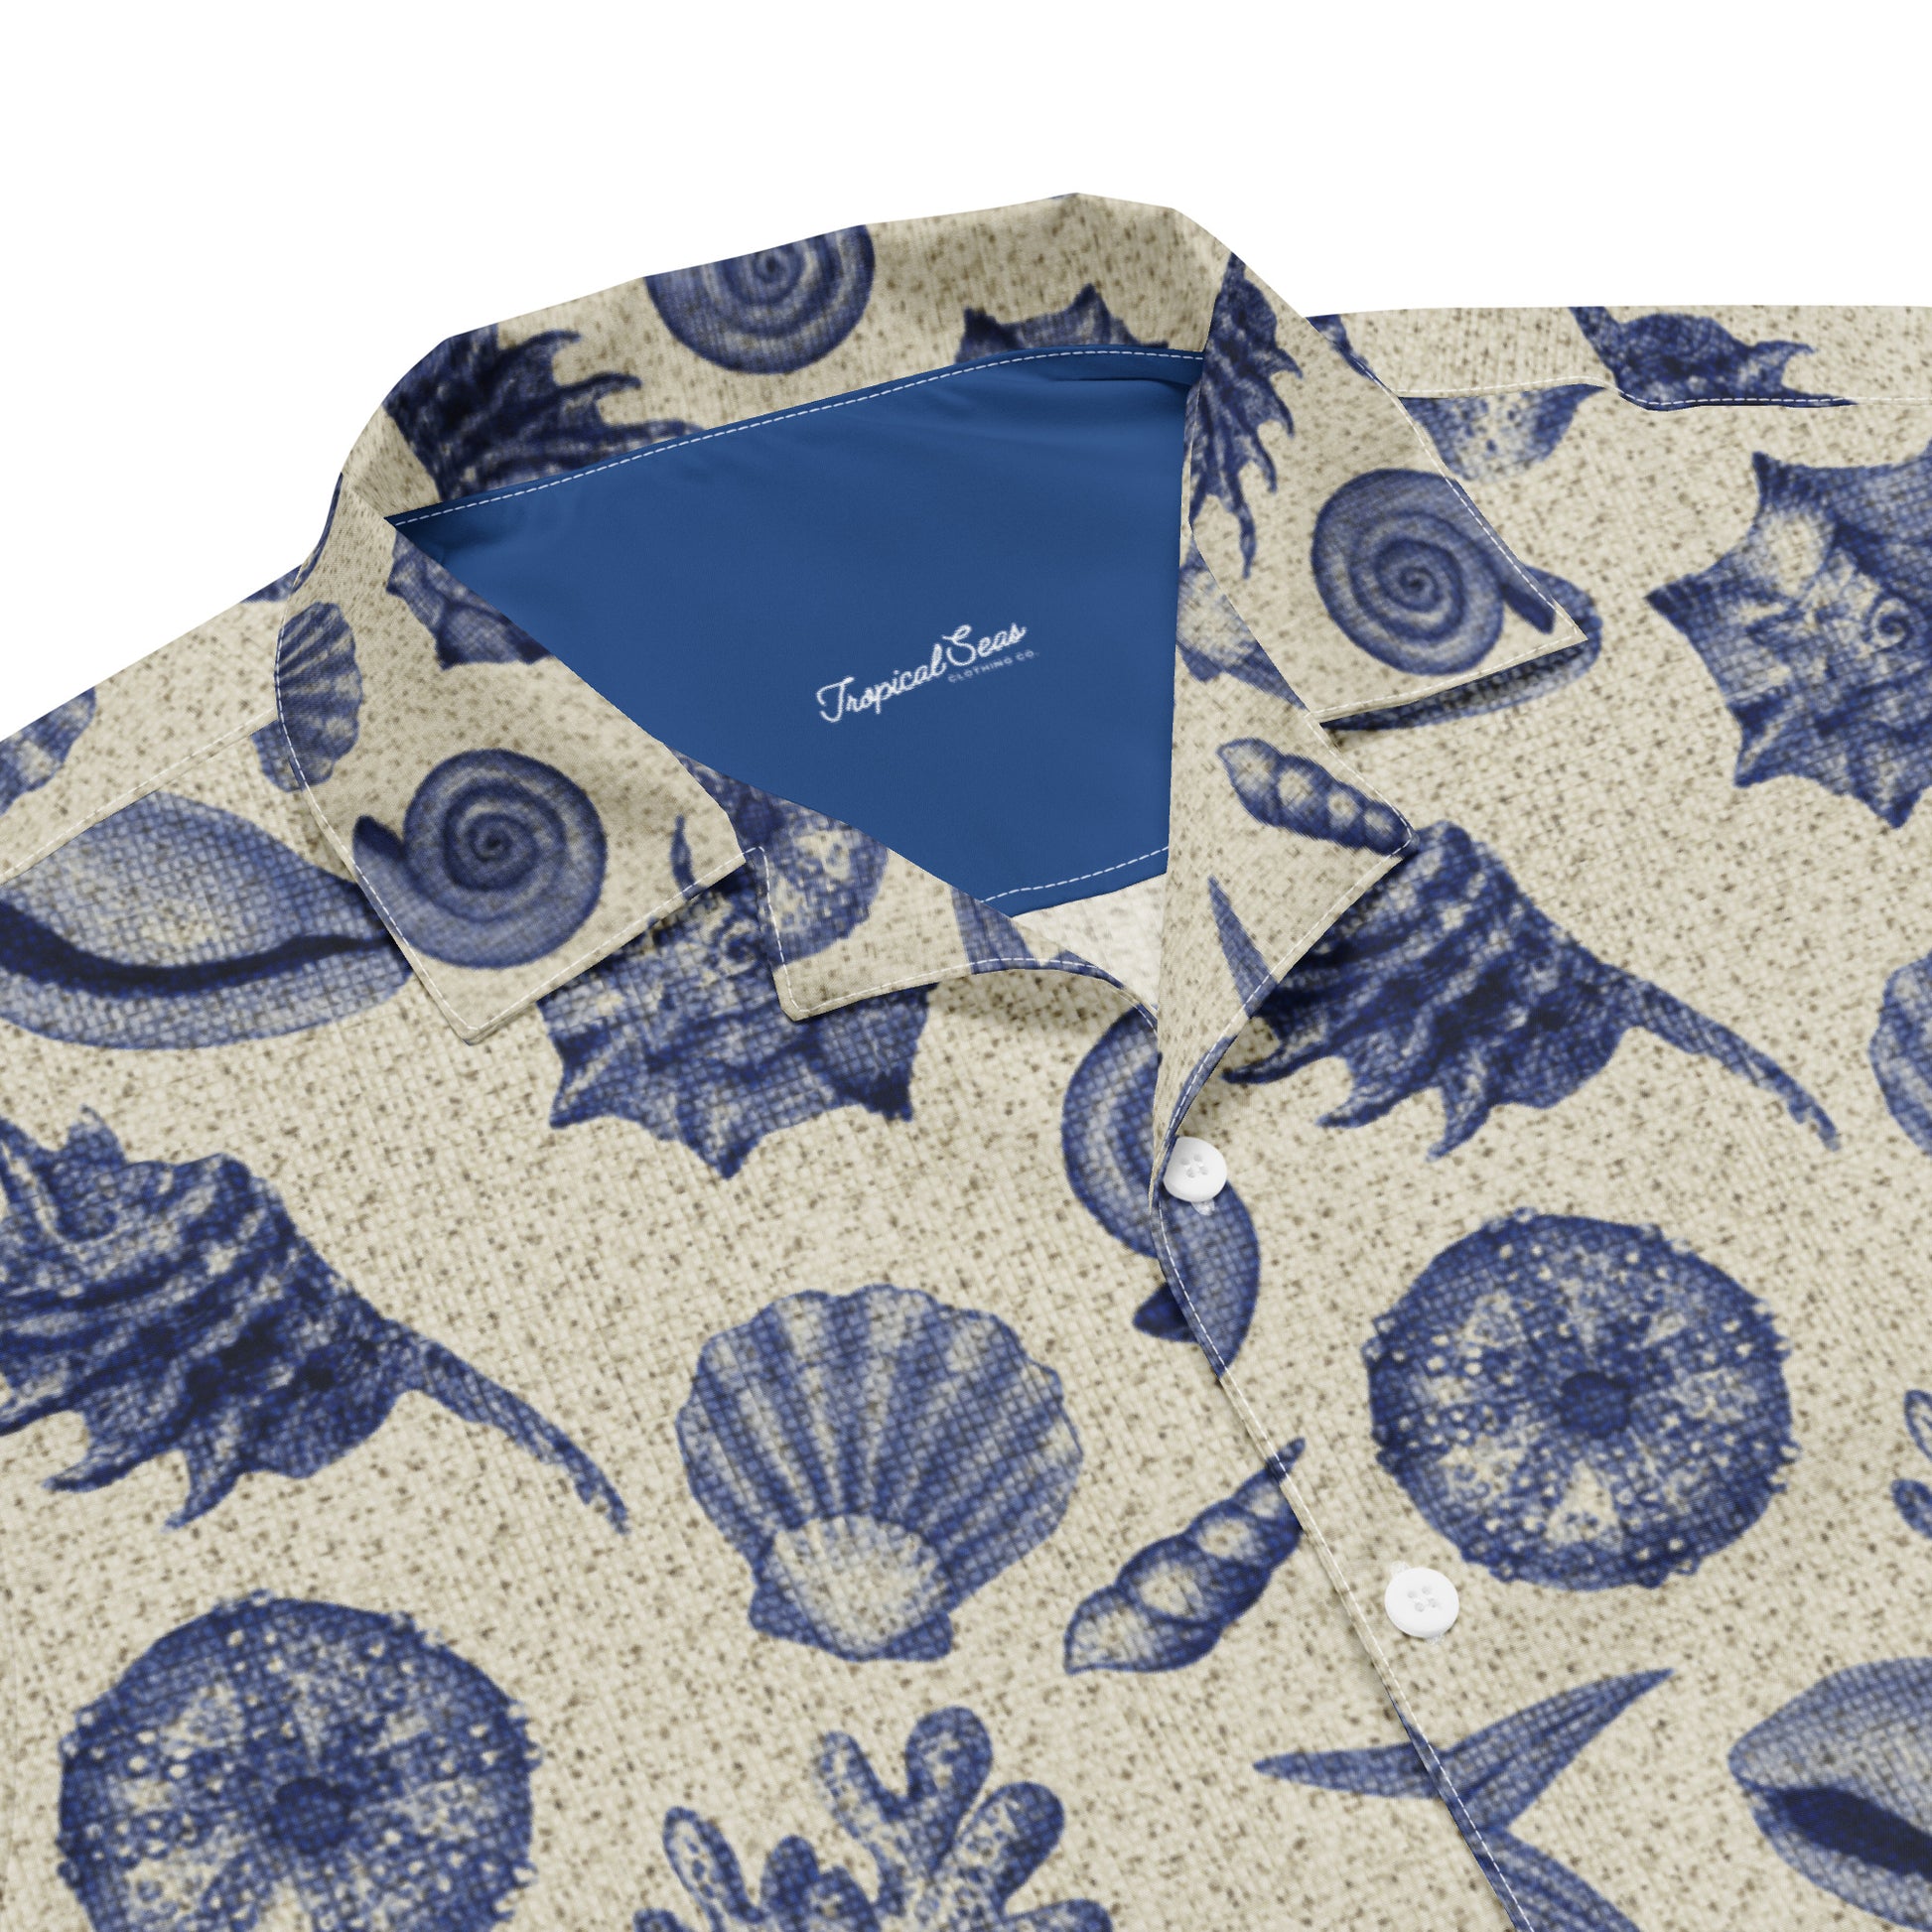 Vintage Beach Shell button shirt - Tropical Seas Clothing 